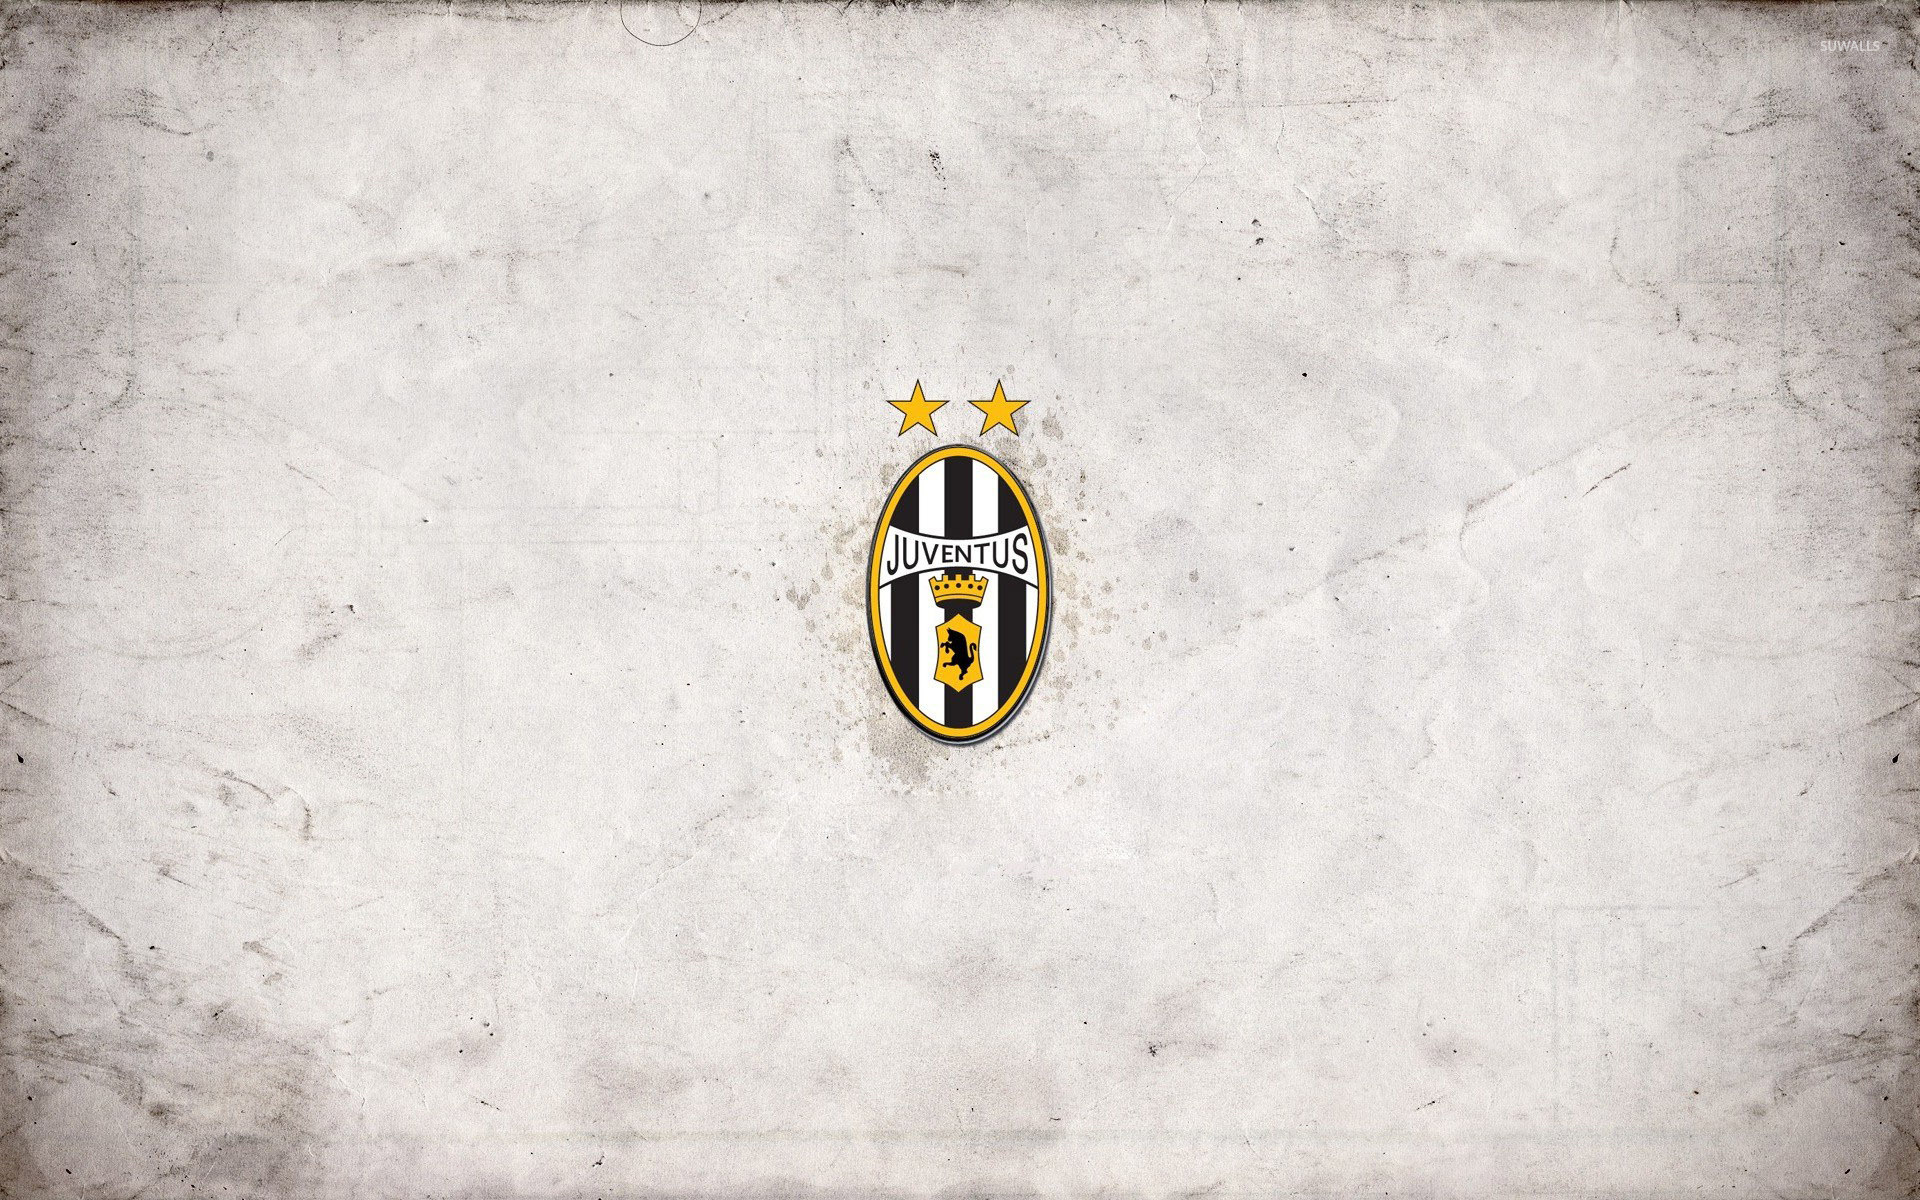 Juventus 2 wallpaper, Sport wallpapers, 1920x1200 HD Desktop